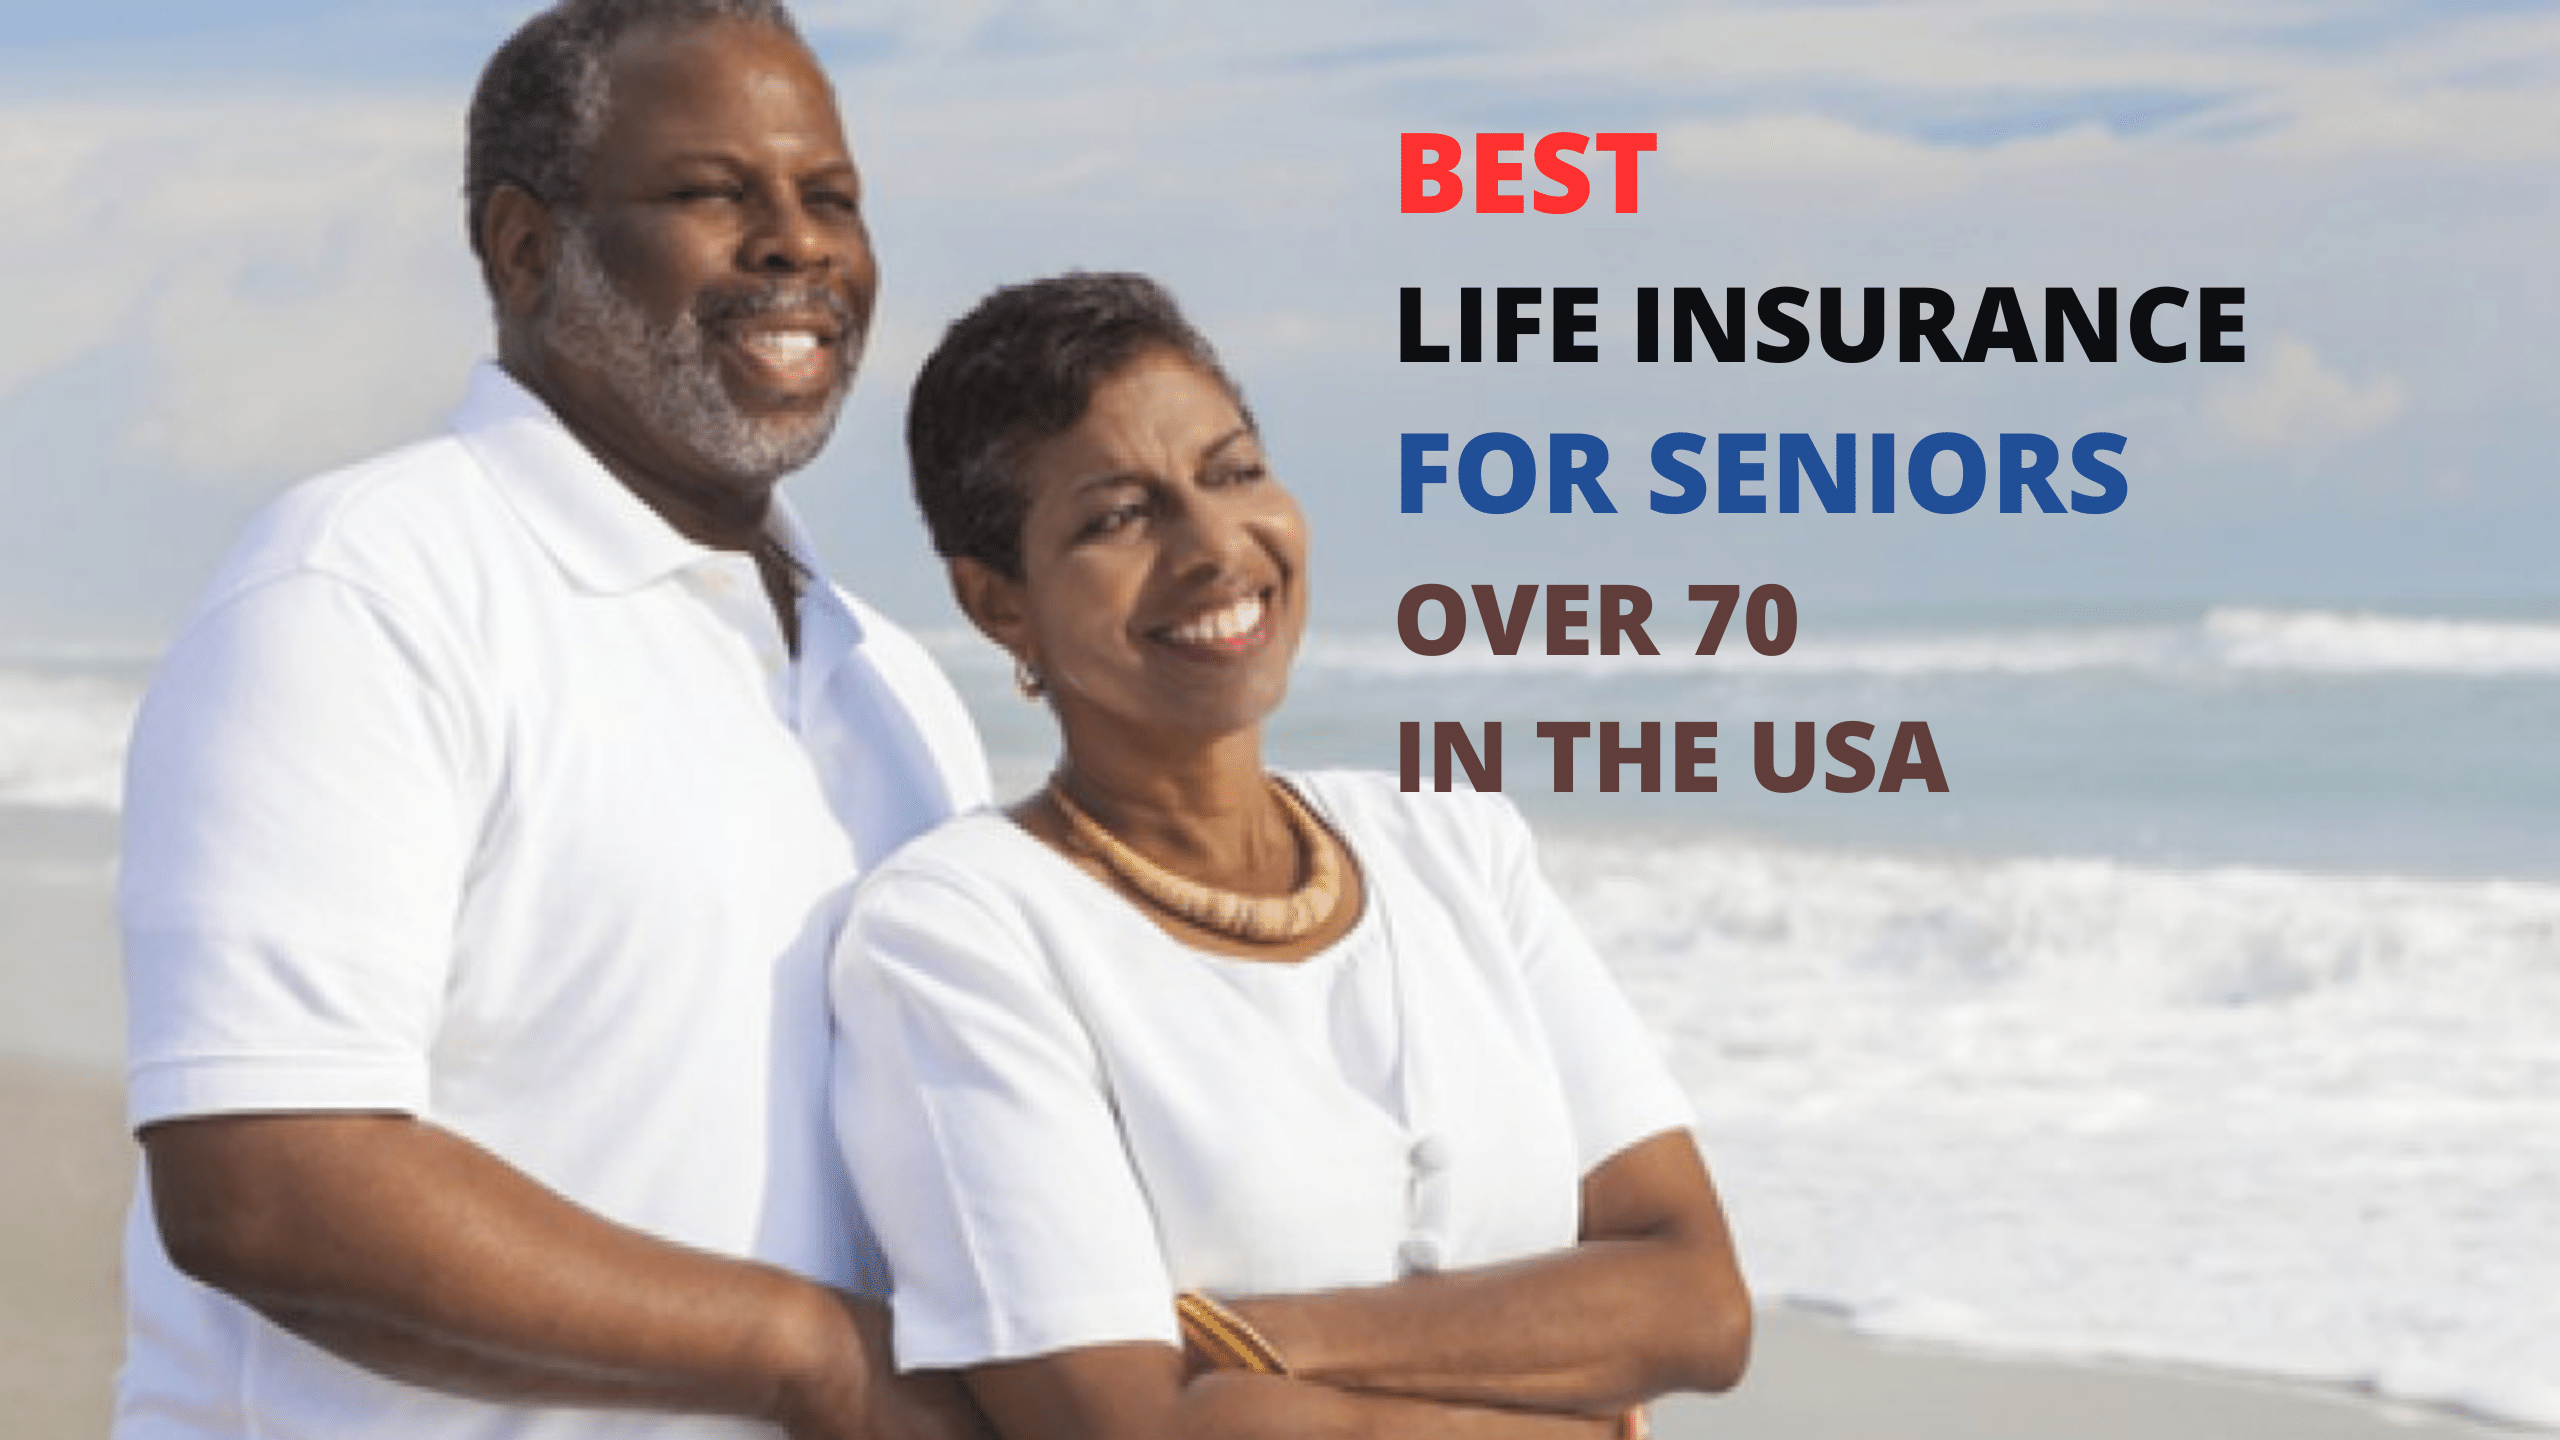 Best life insurance for seniors over 70 in the USA